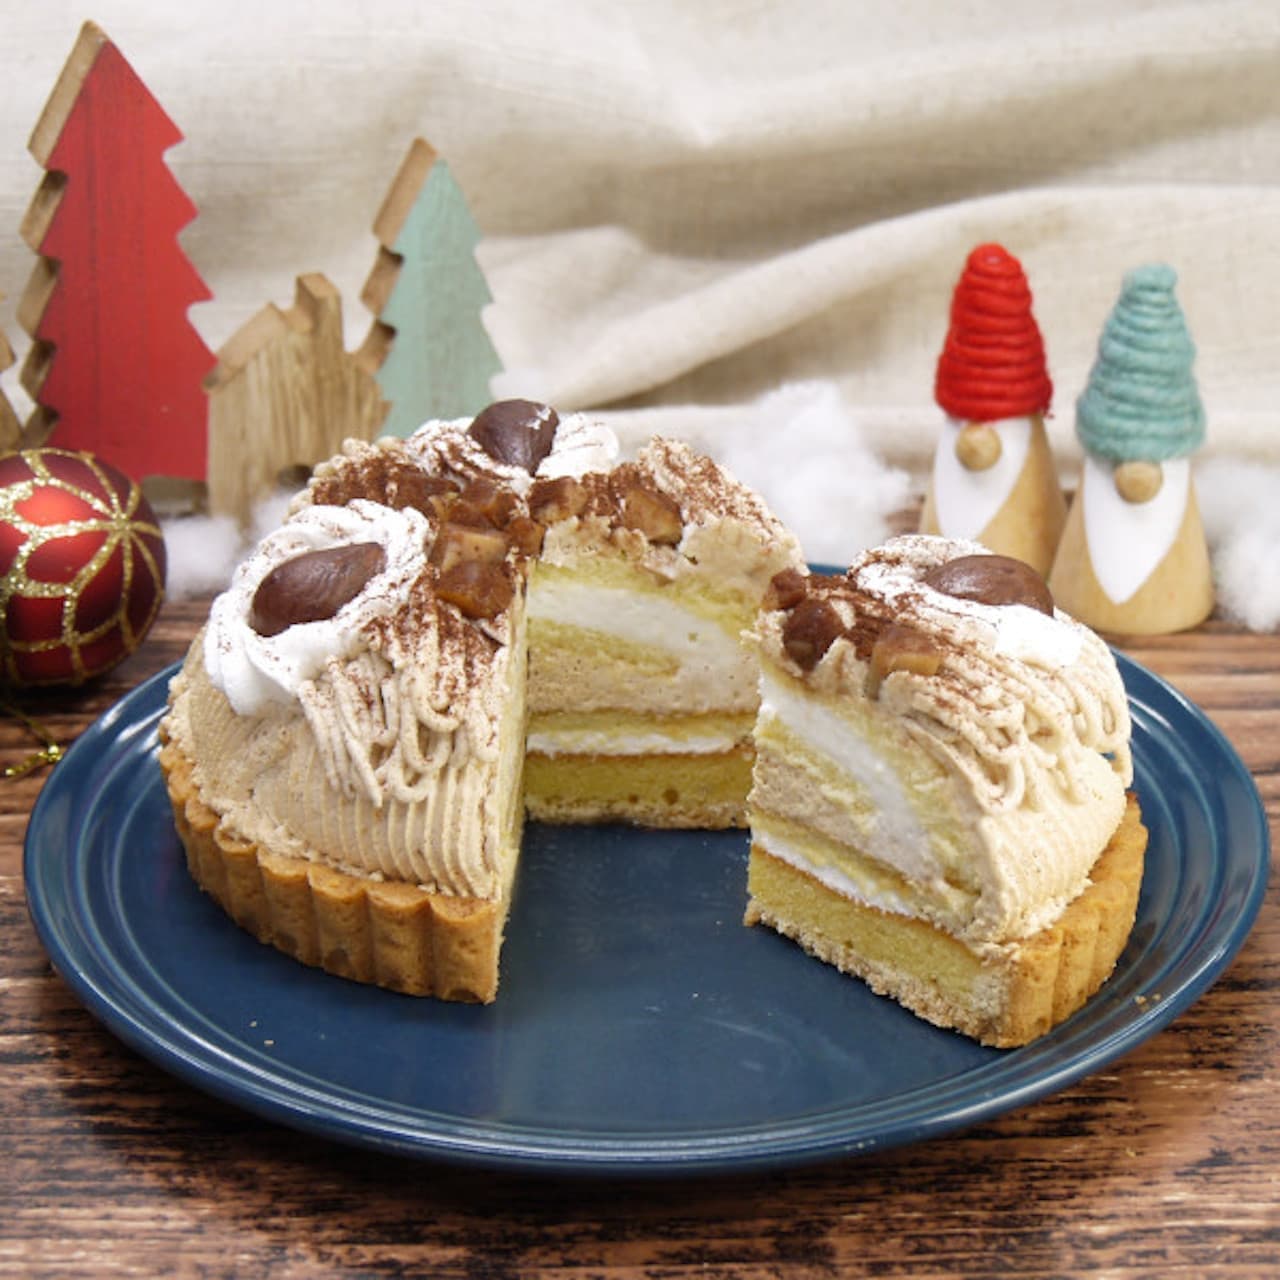 Aeon Christmas Sweets "Zuccotto-style Mont Blanc Tart